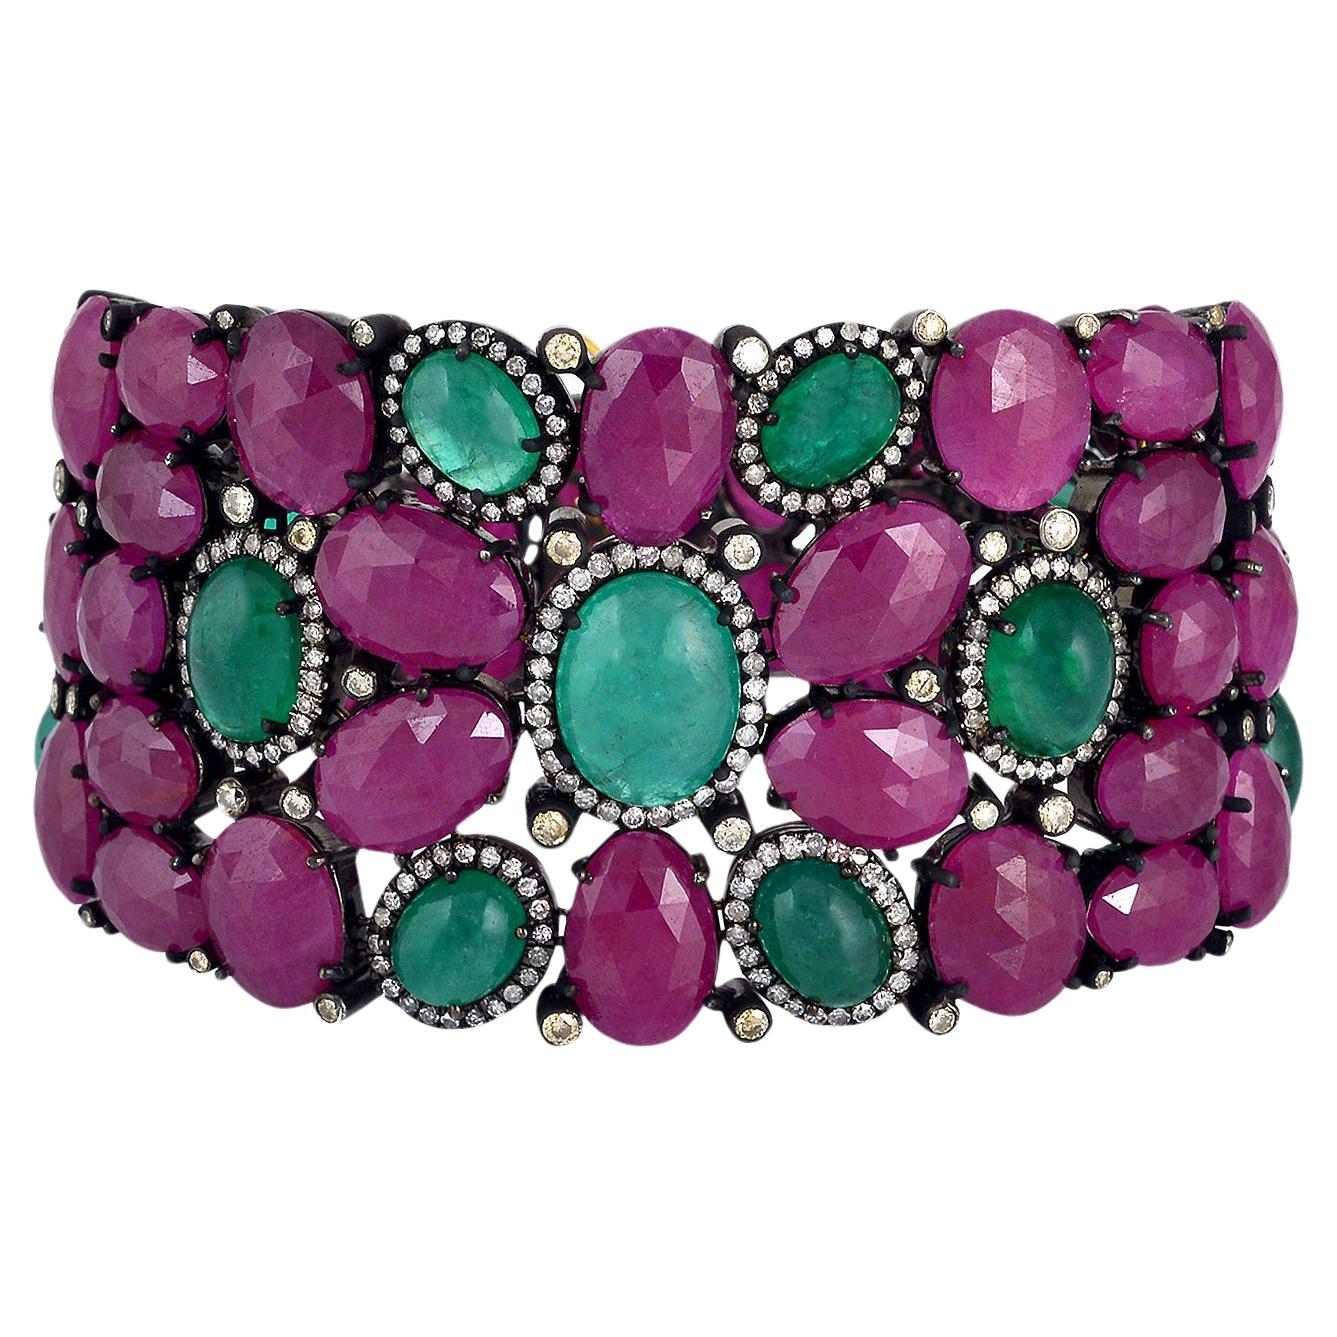 Baroque 139 Carats Natural Ruby Emerald & Diamond Bracelet 18k Gold & Silver